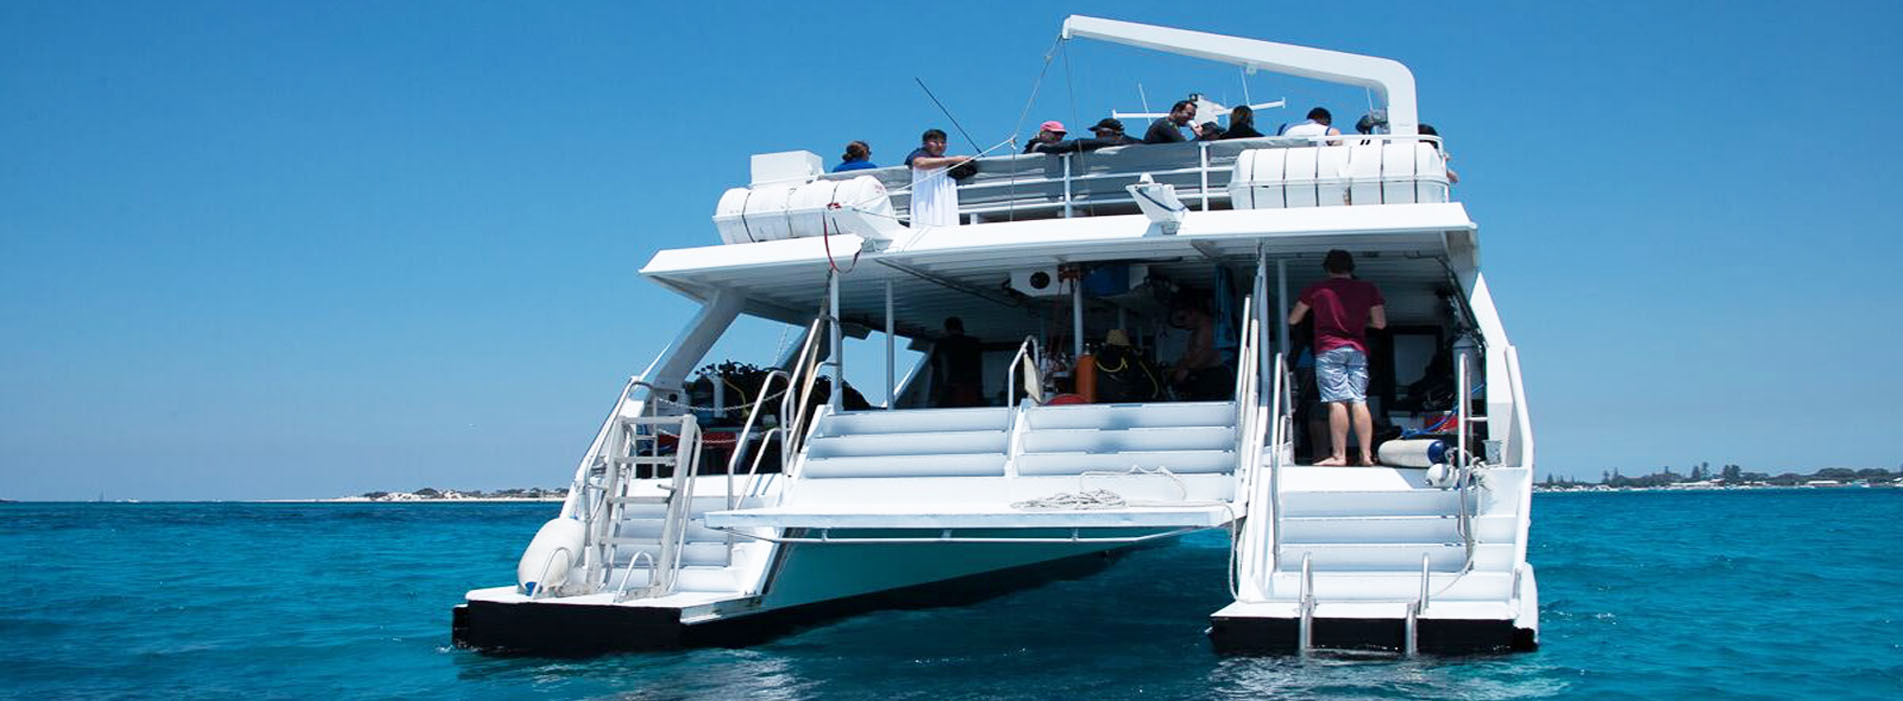 BLUE-DESTINY-rear-stern-photo-boat-charters-Perth-WA